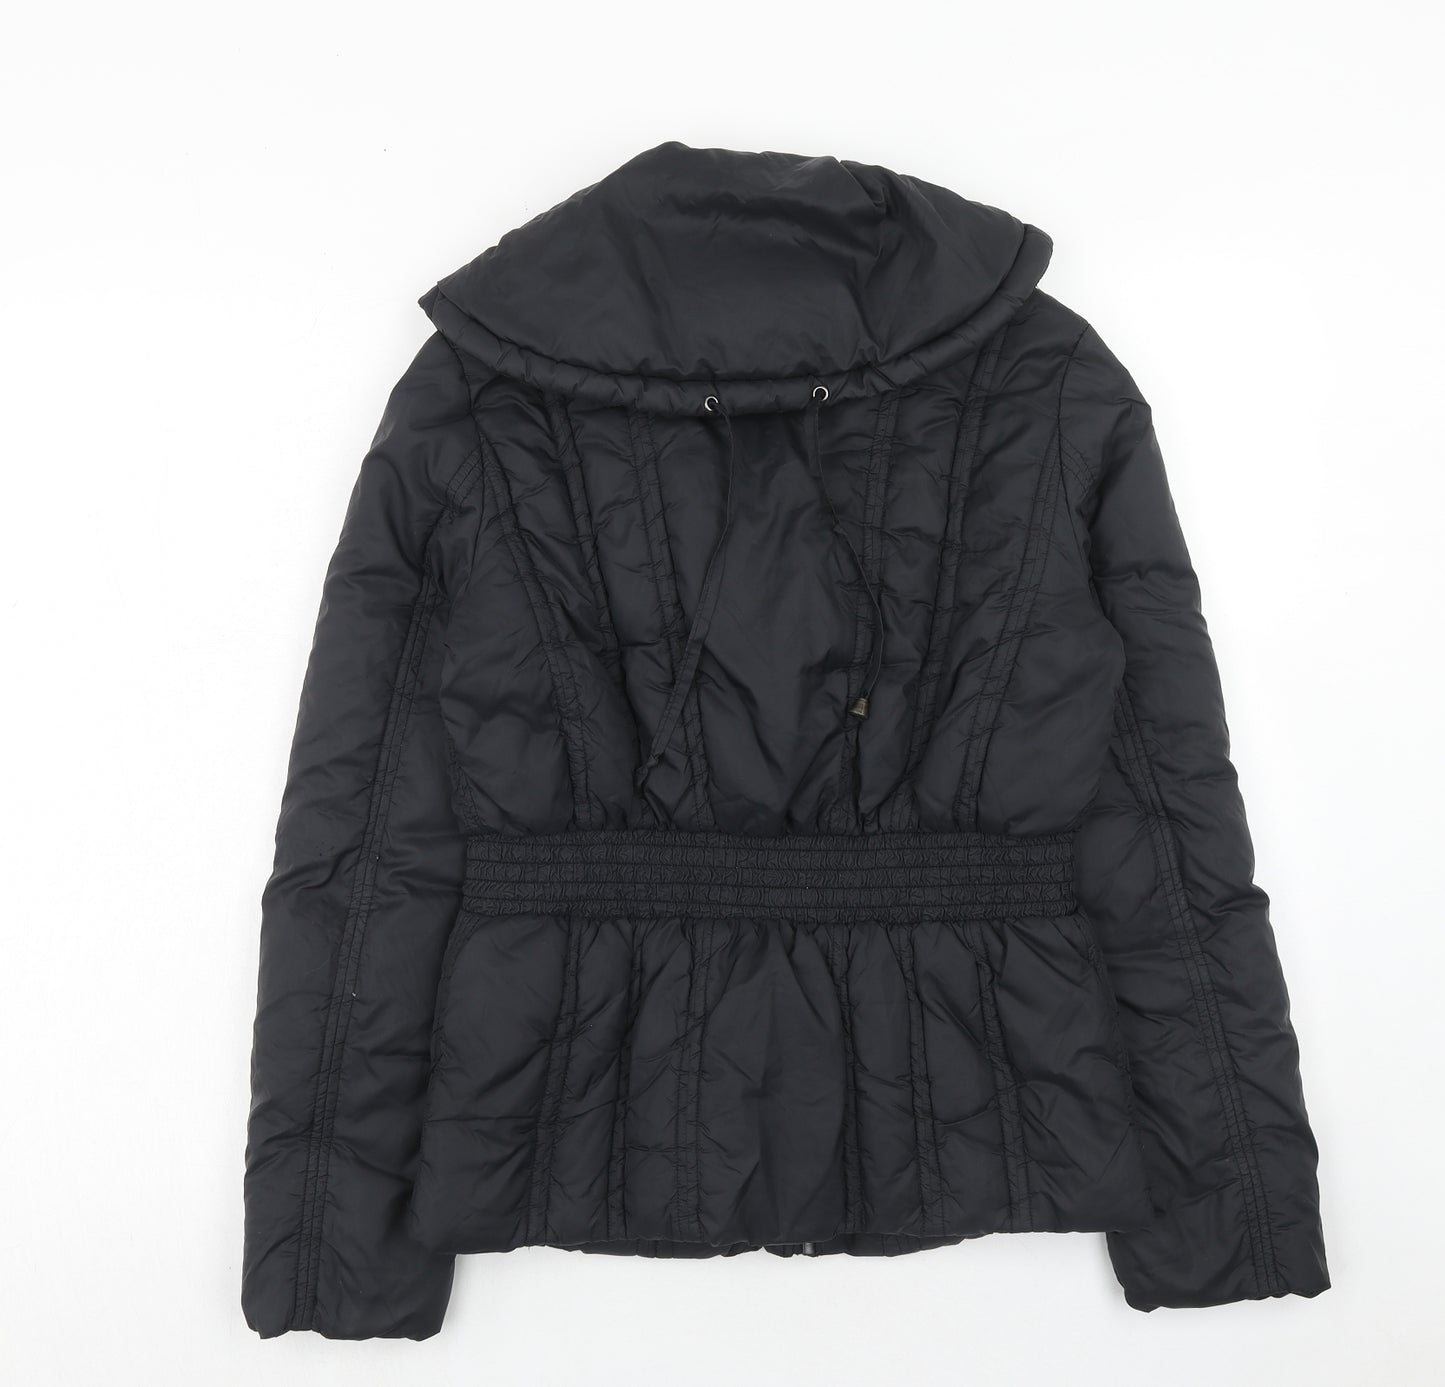 Honee Womens Black Quilted Jacket Size S Zip